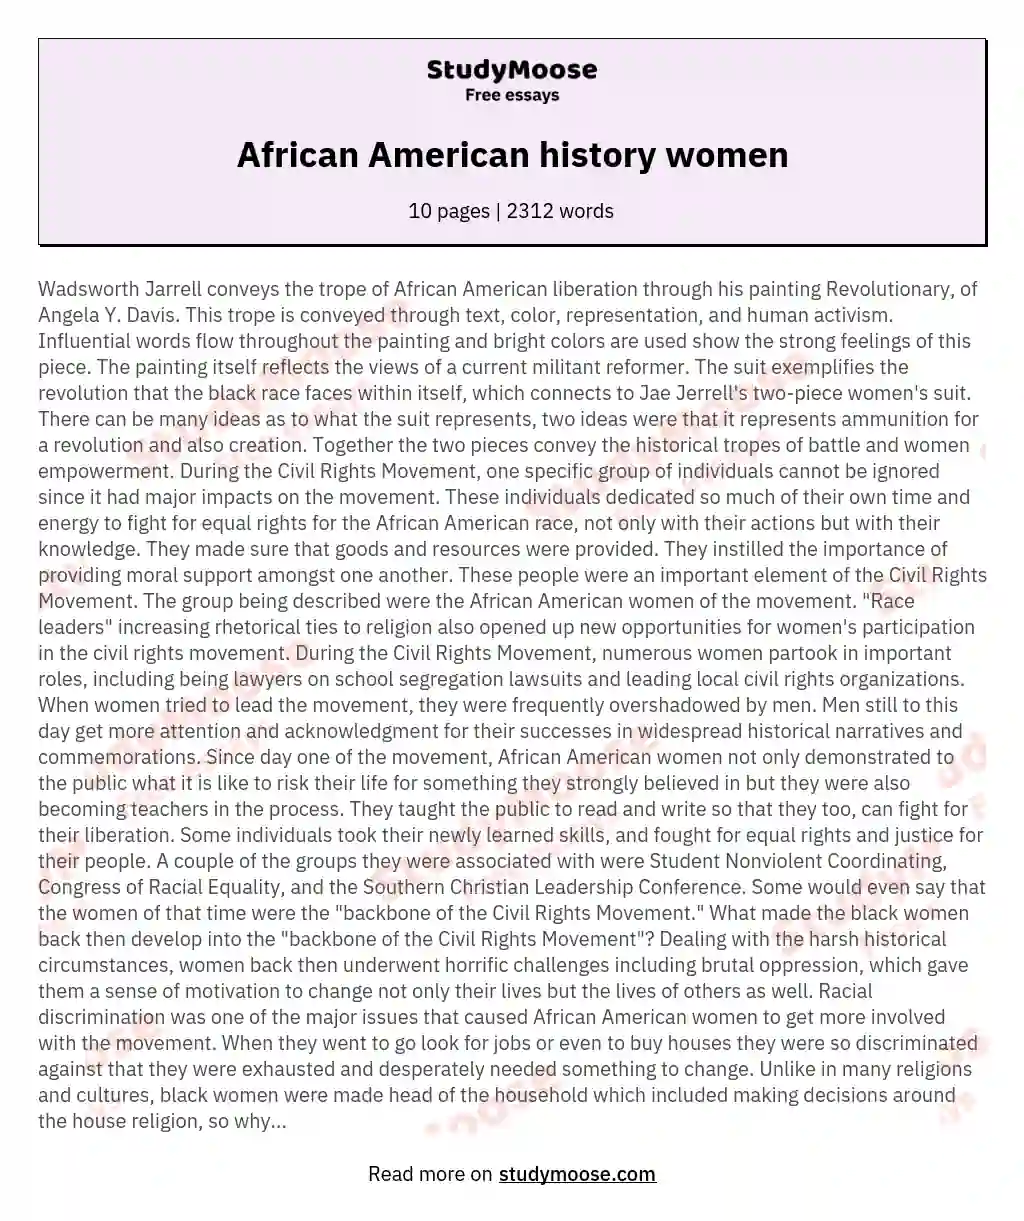 African American history women